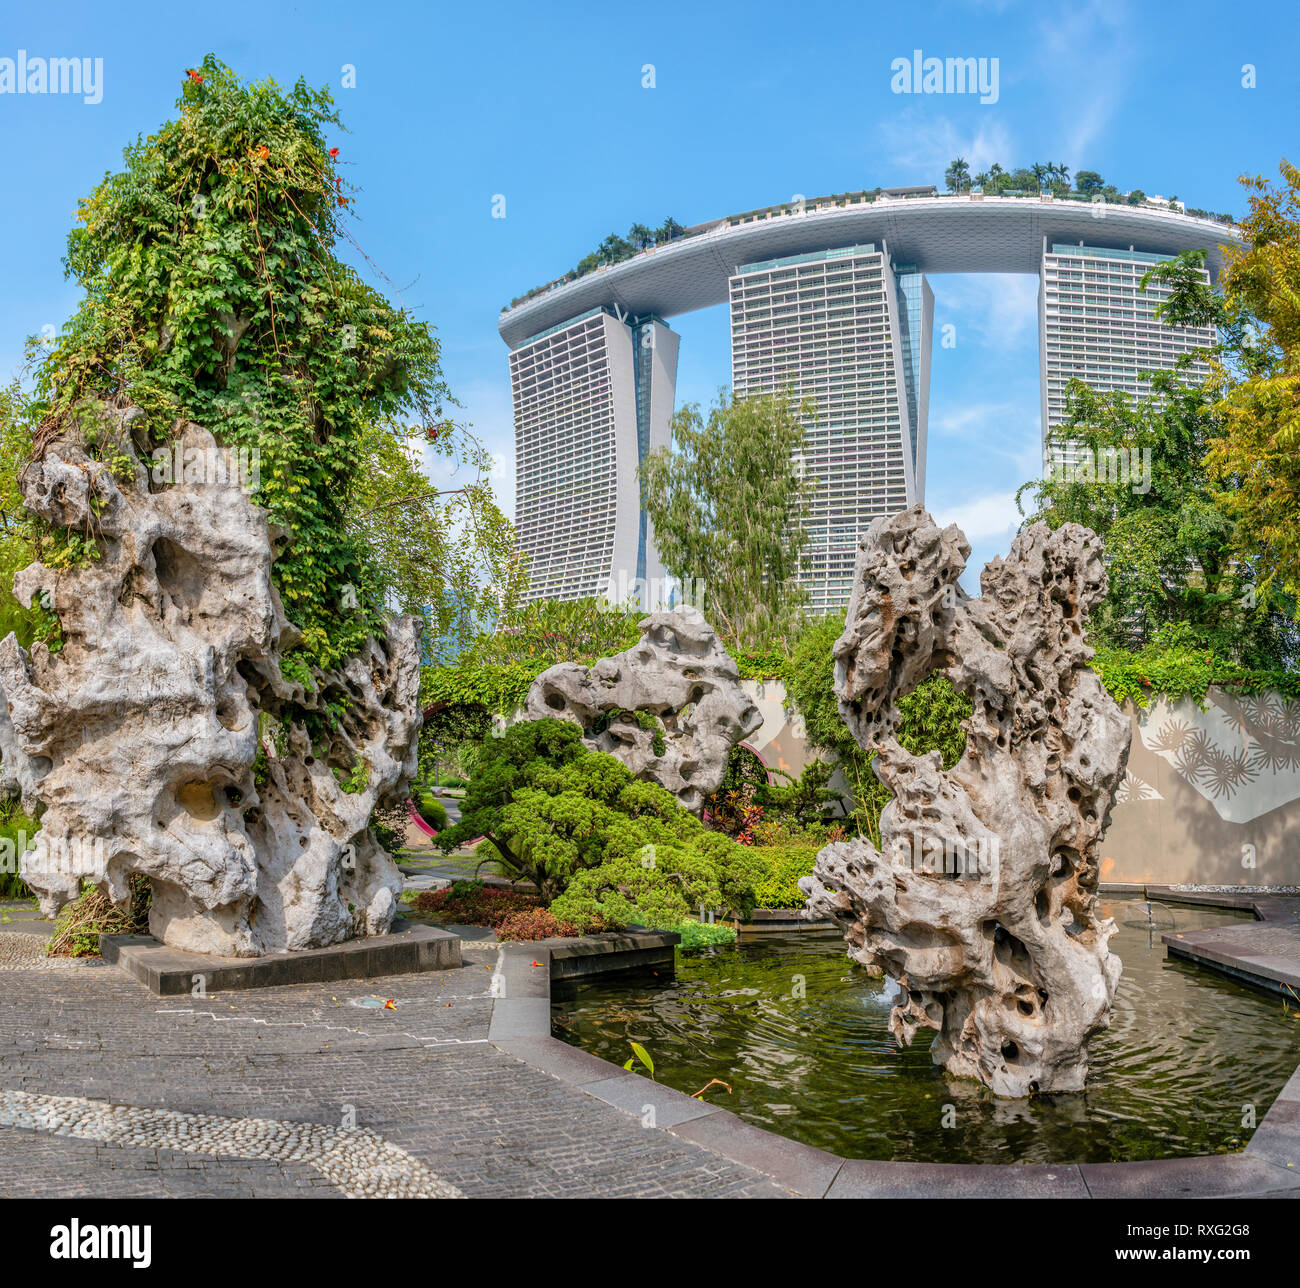 Giardino Cinese presso Gardens by the Bay, Singapore Foto Stock